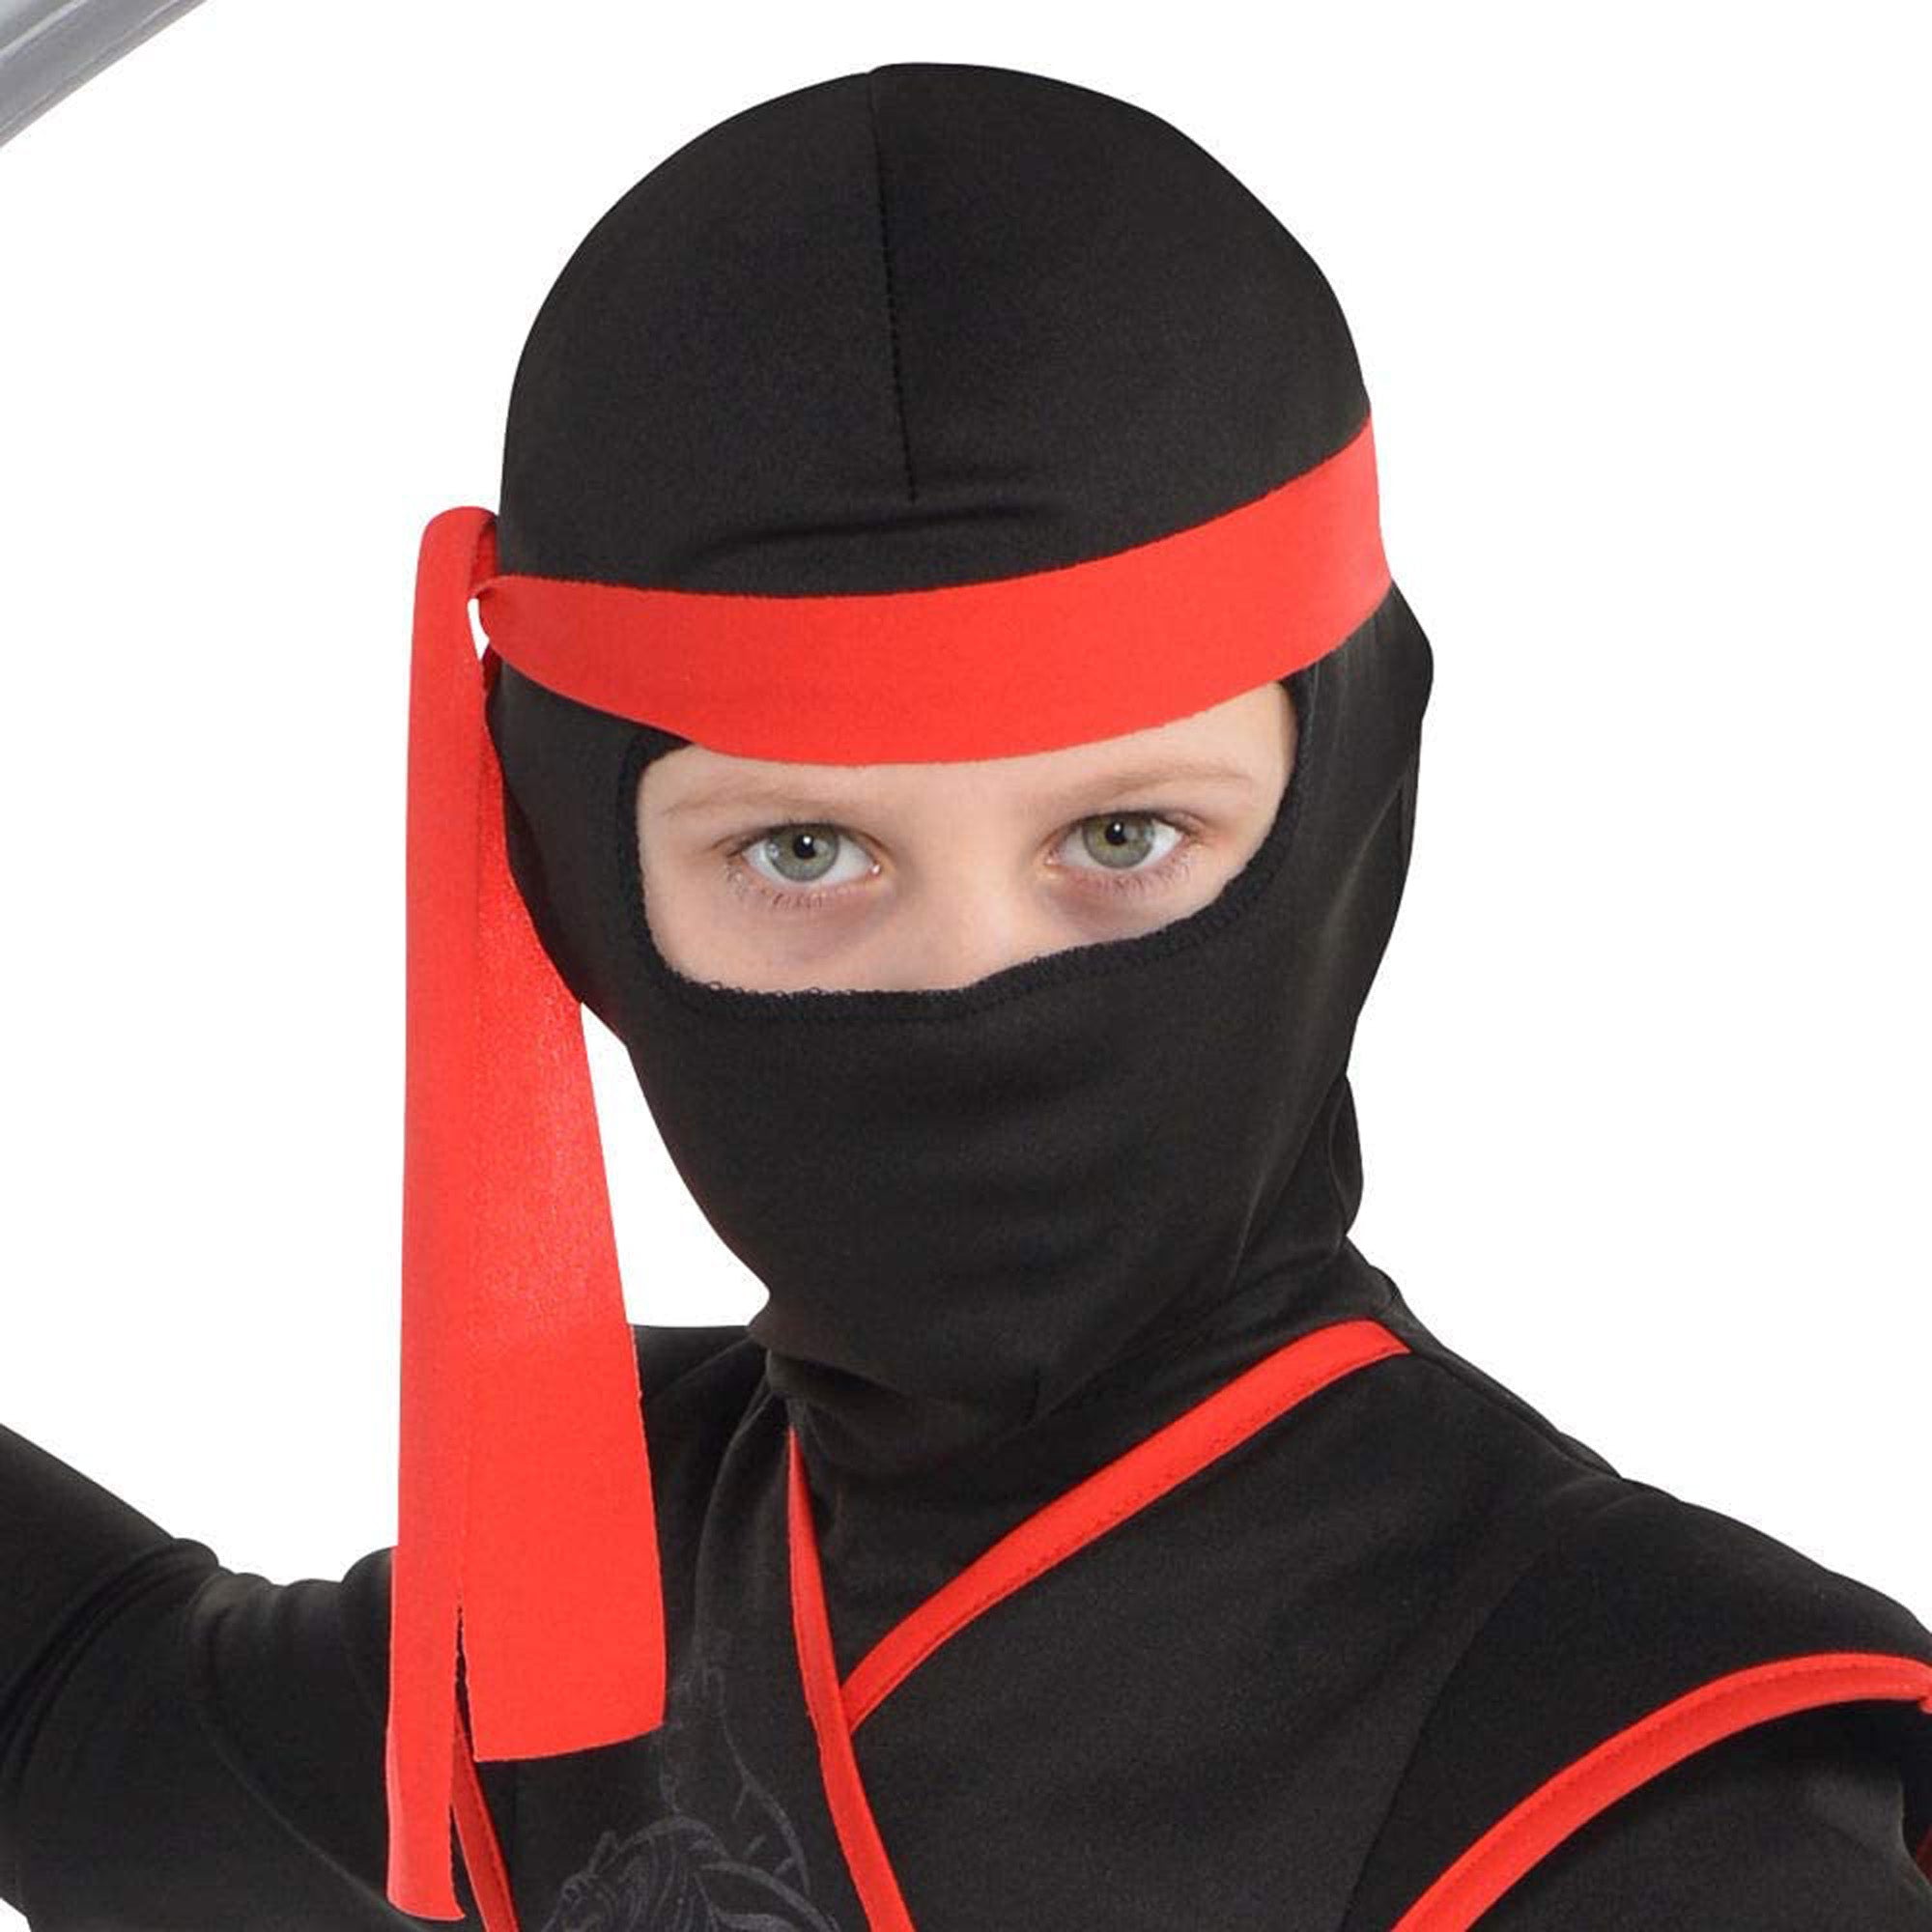 Walker of Shadows Ninja Costume, Dark Ninja Costume, Womens Ninja